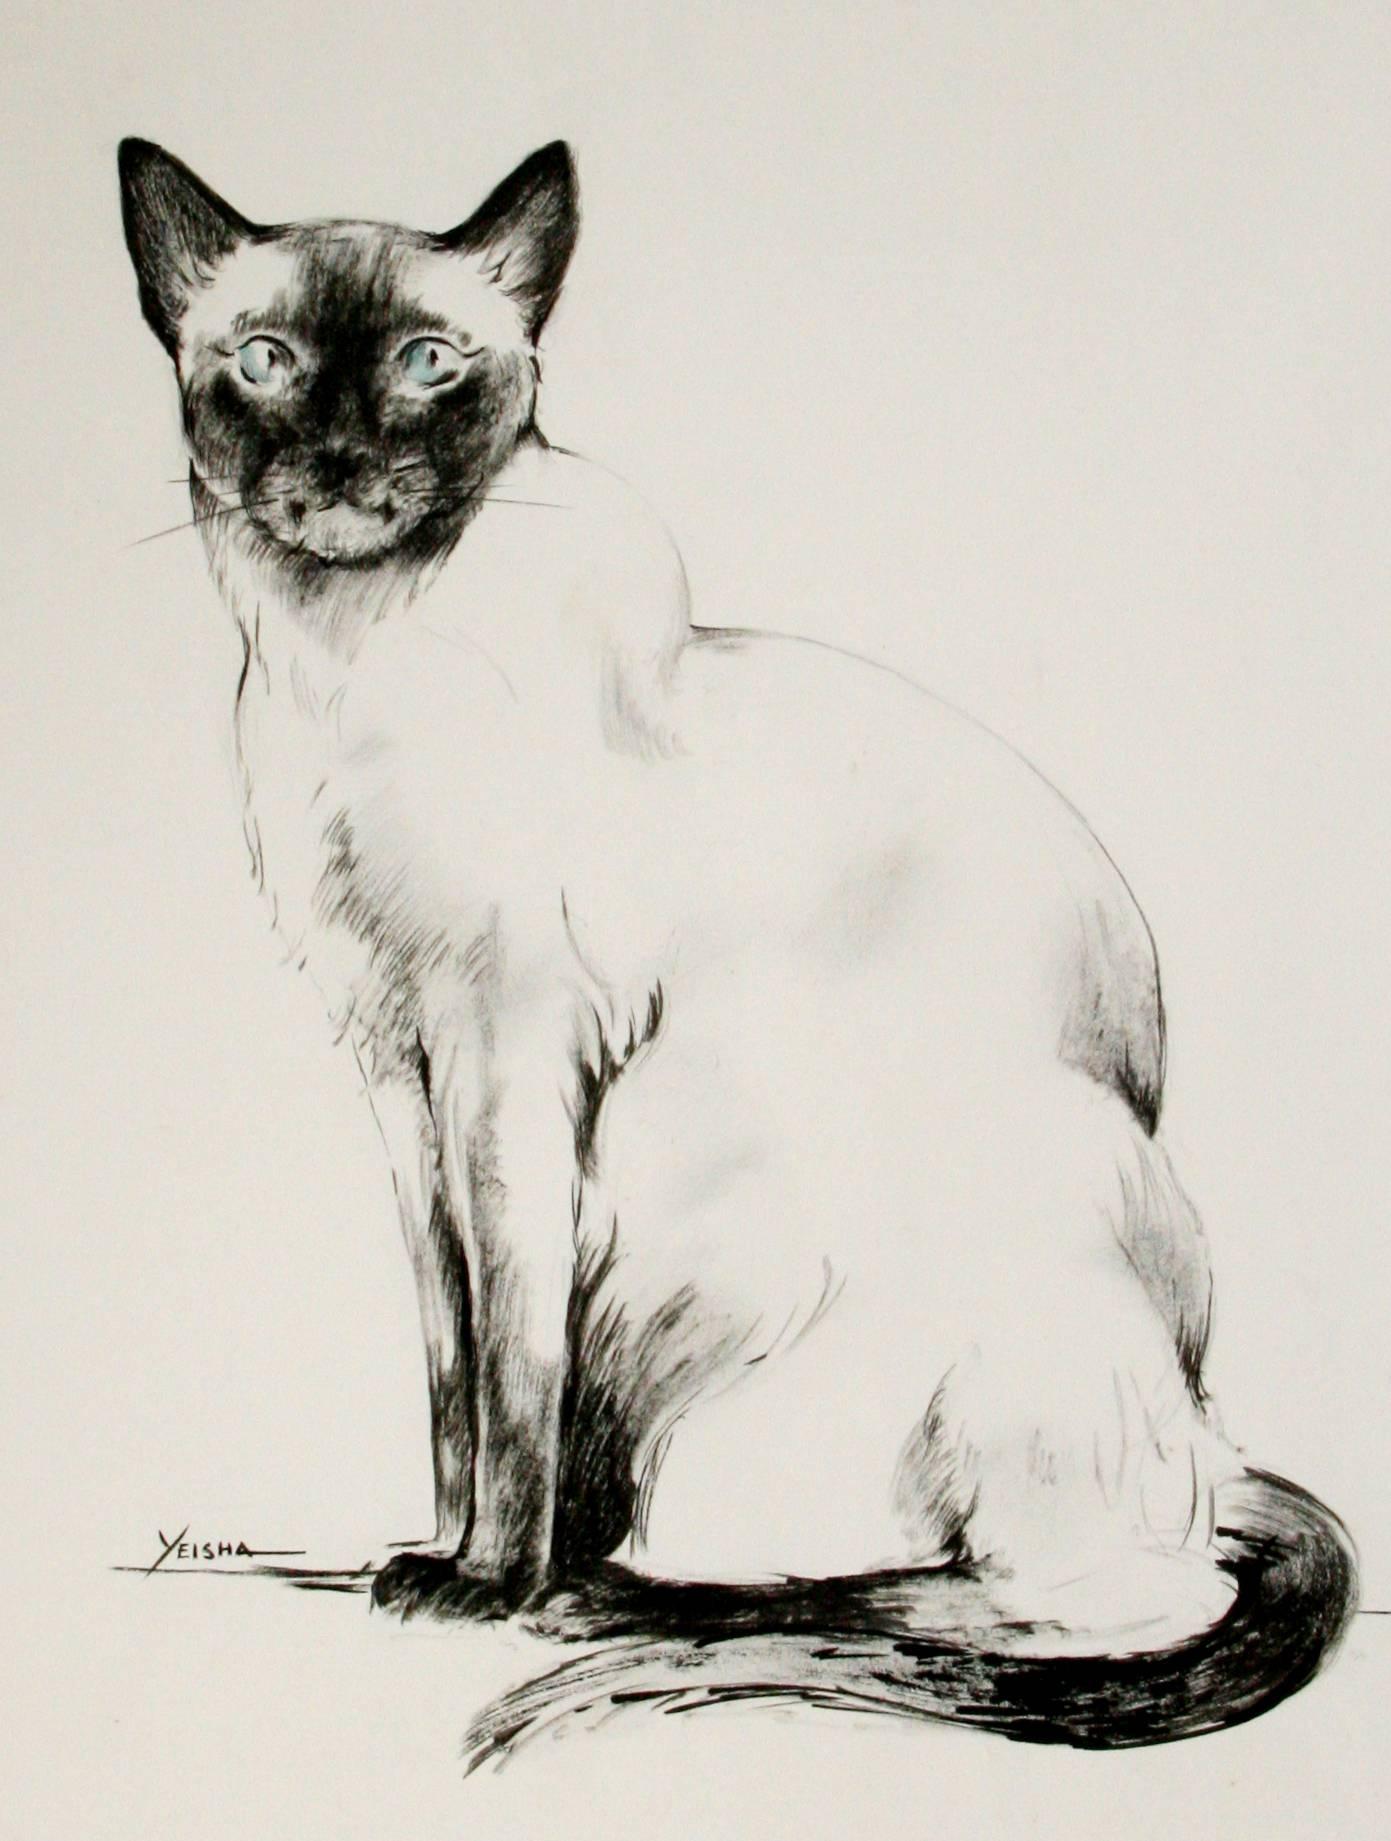 Yeisha Animal Art - Coquette.